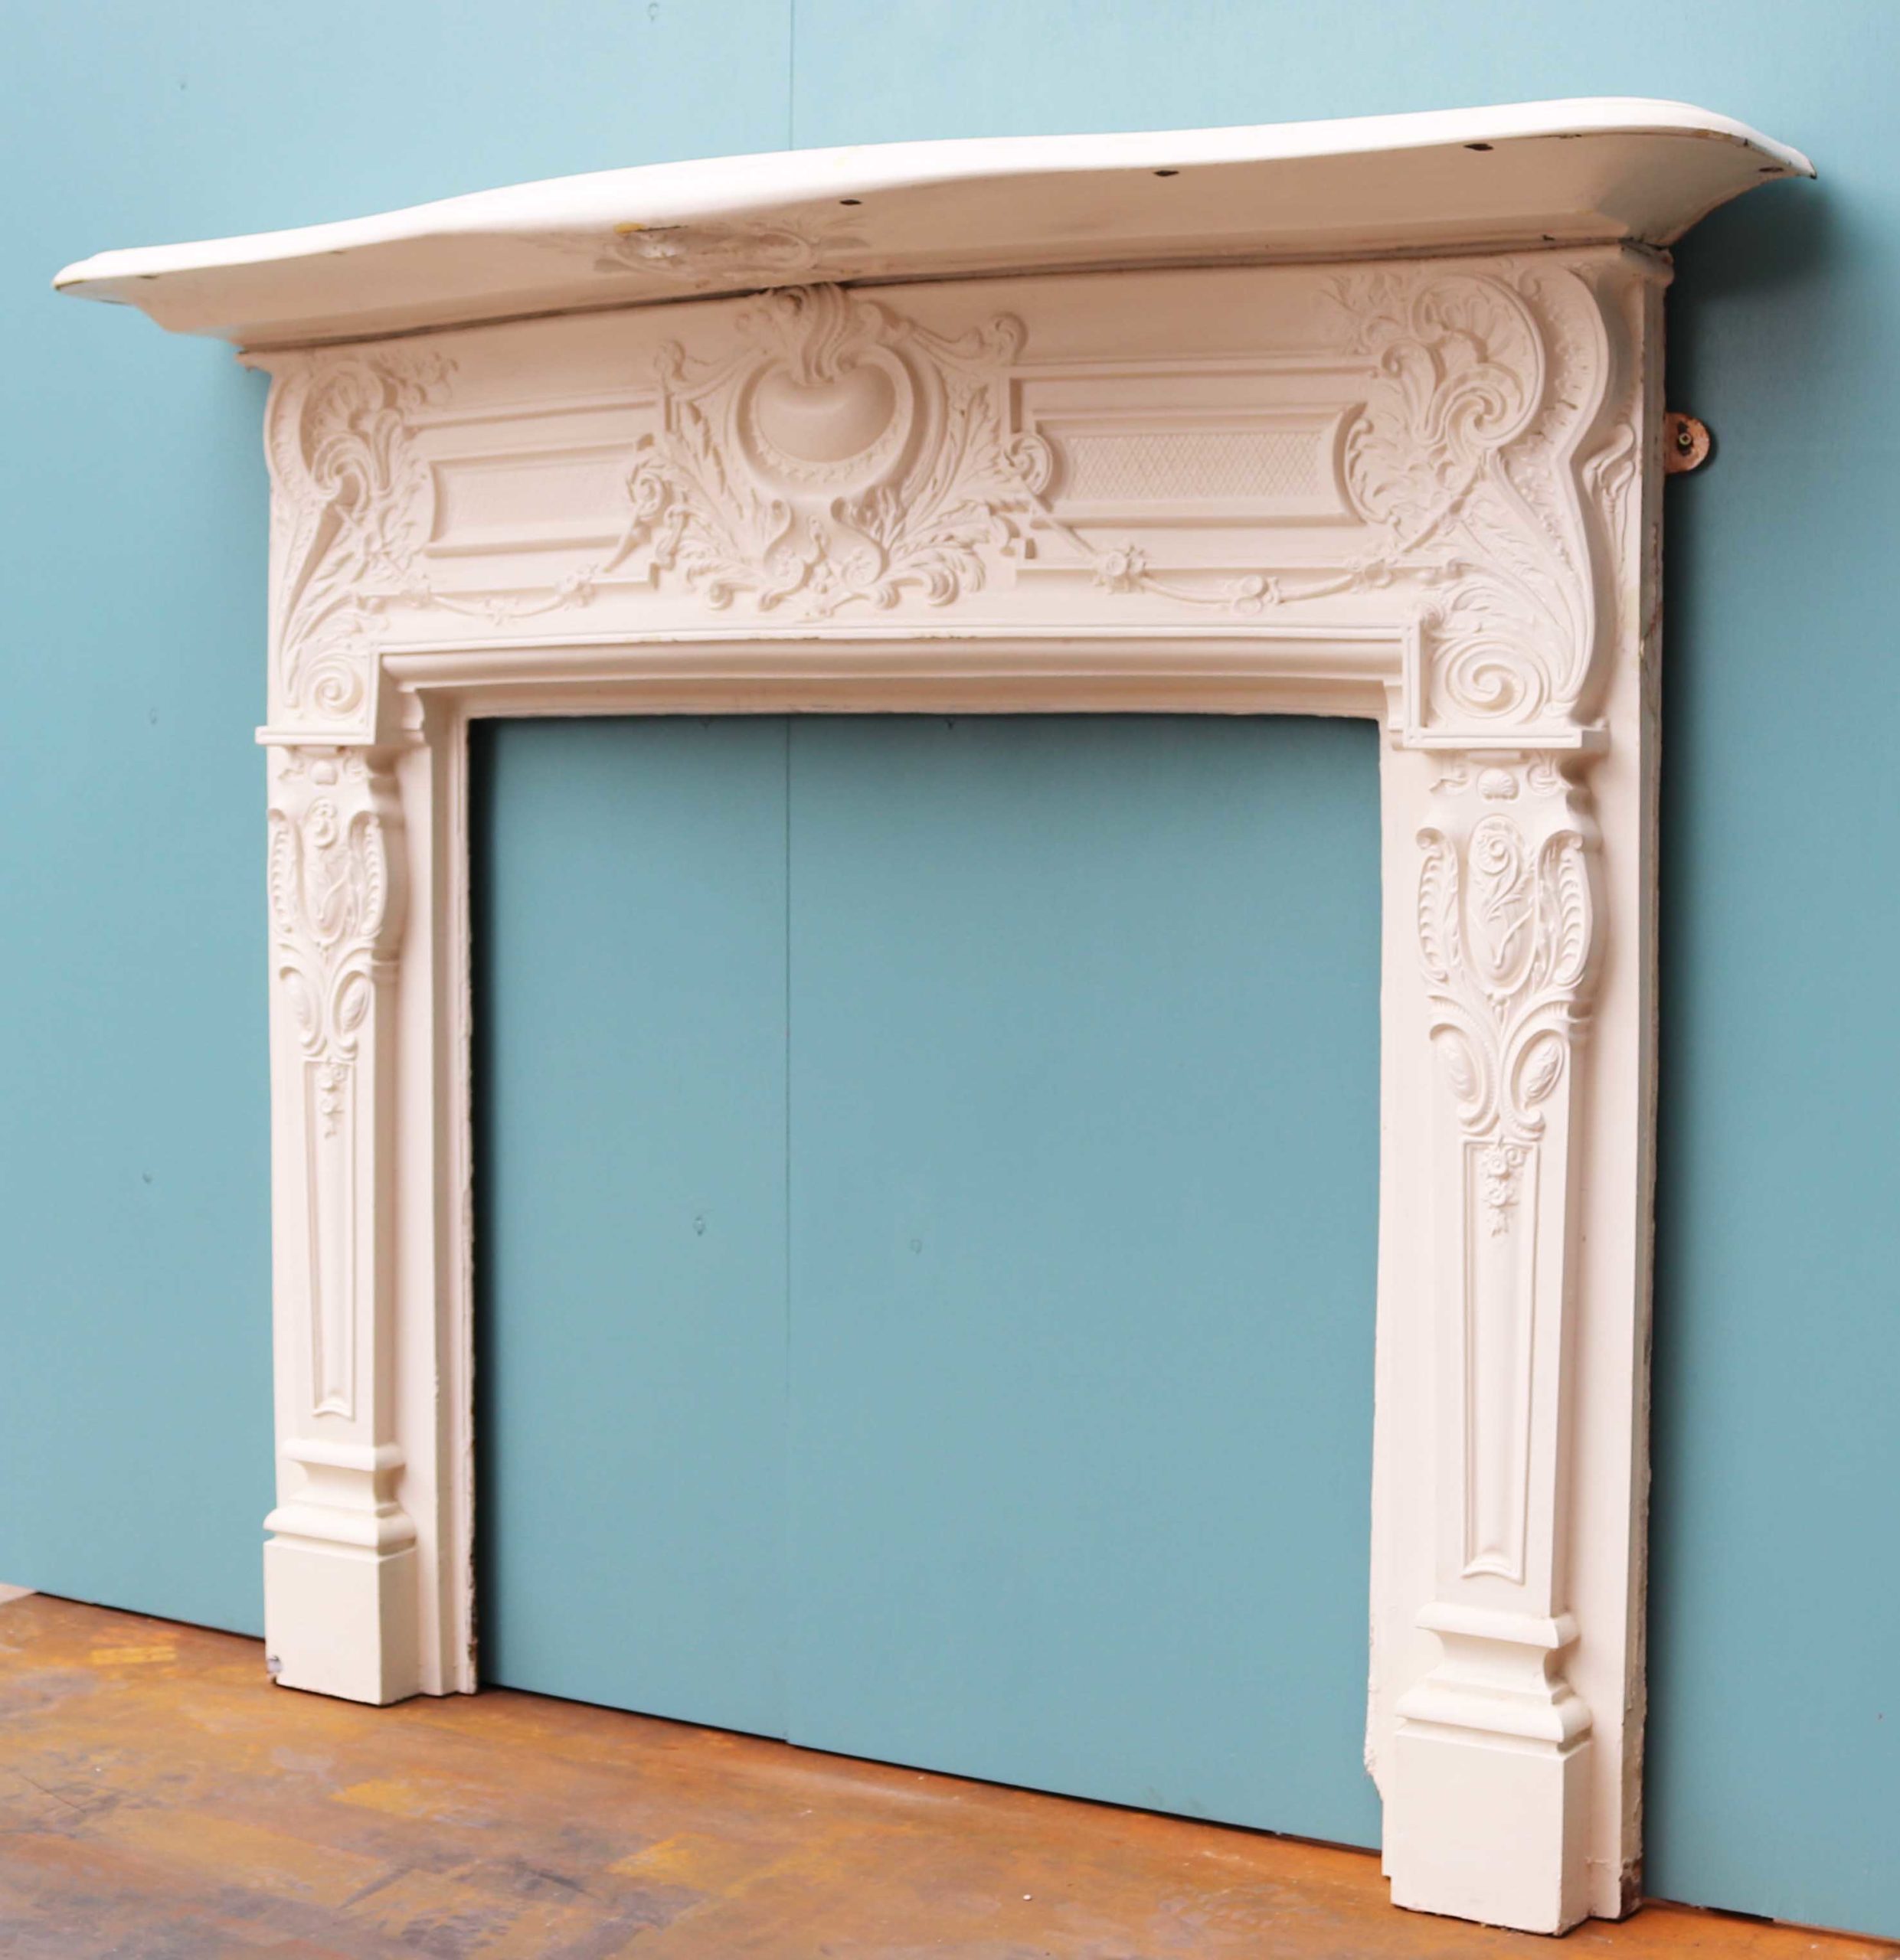 An Antique English Cast Iron Fireplace, Reclaimed Fireplace Surrounds Uk